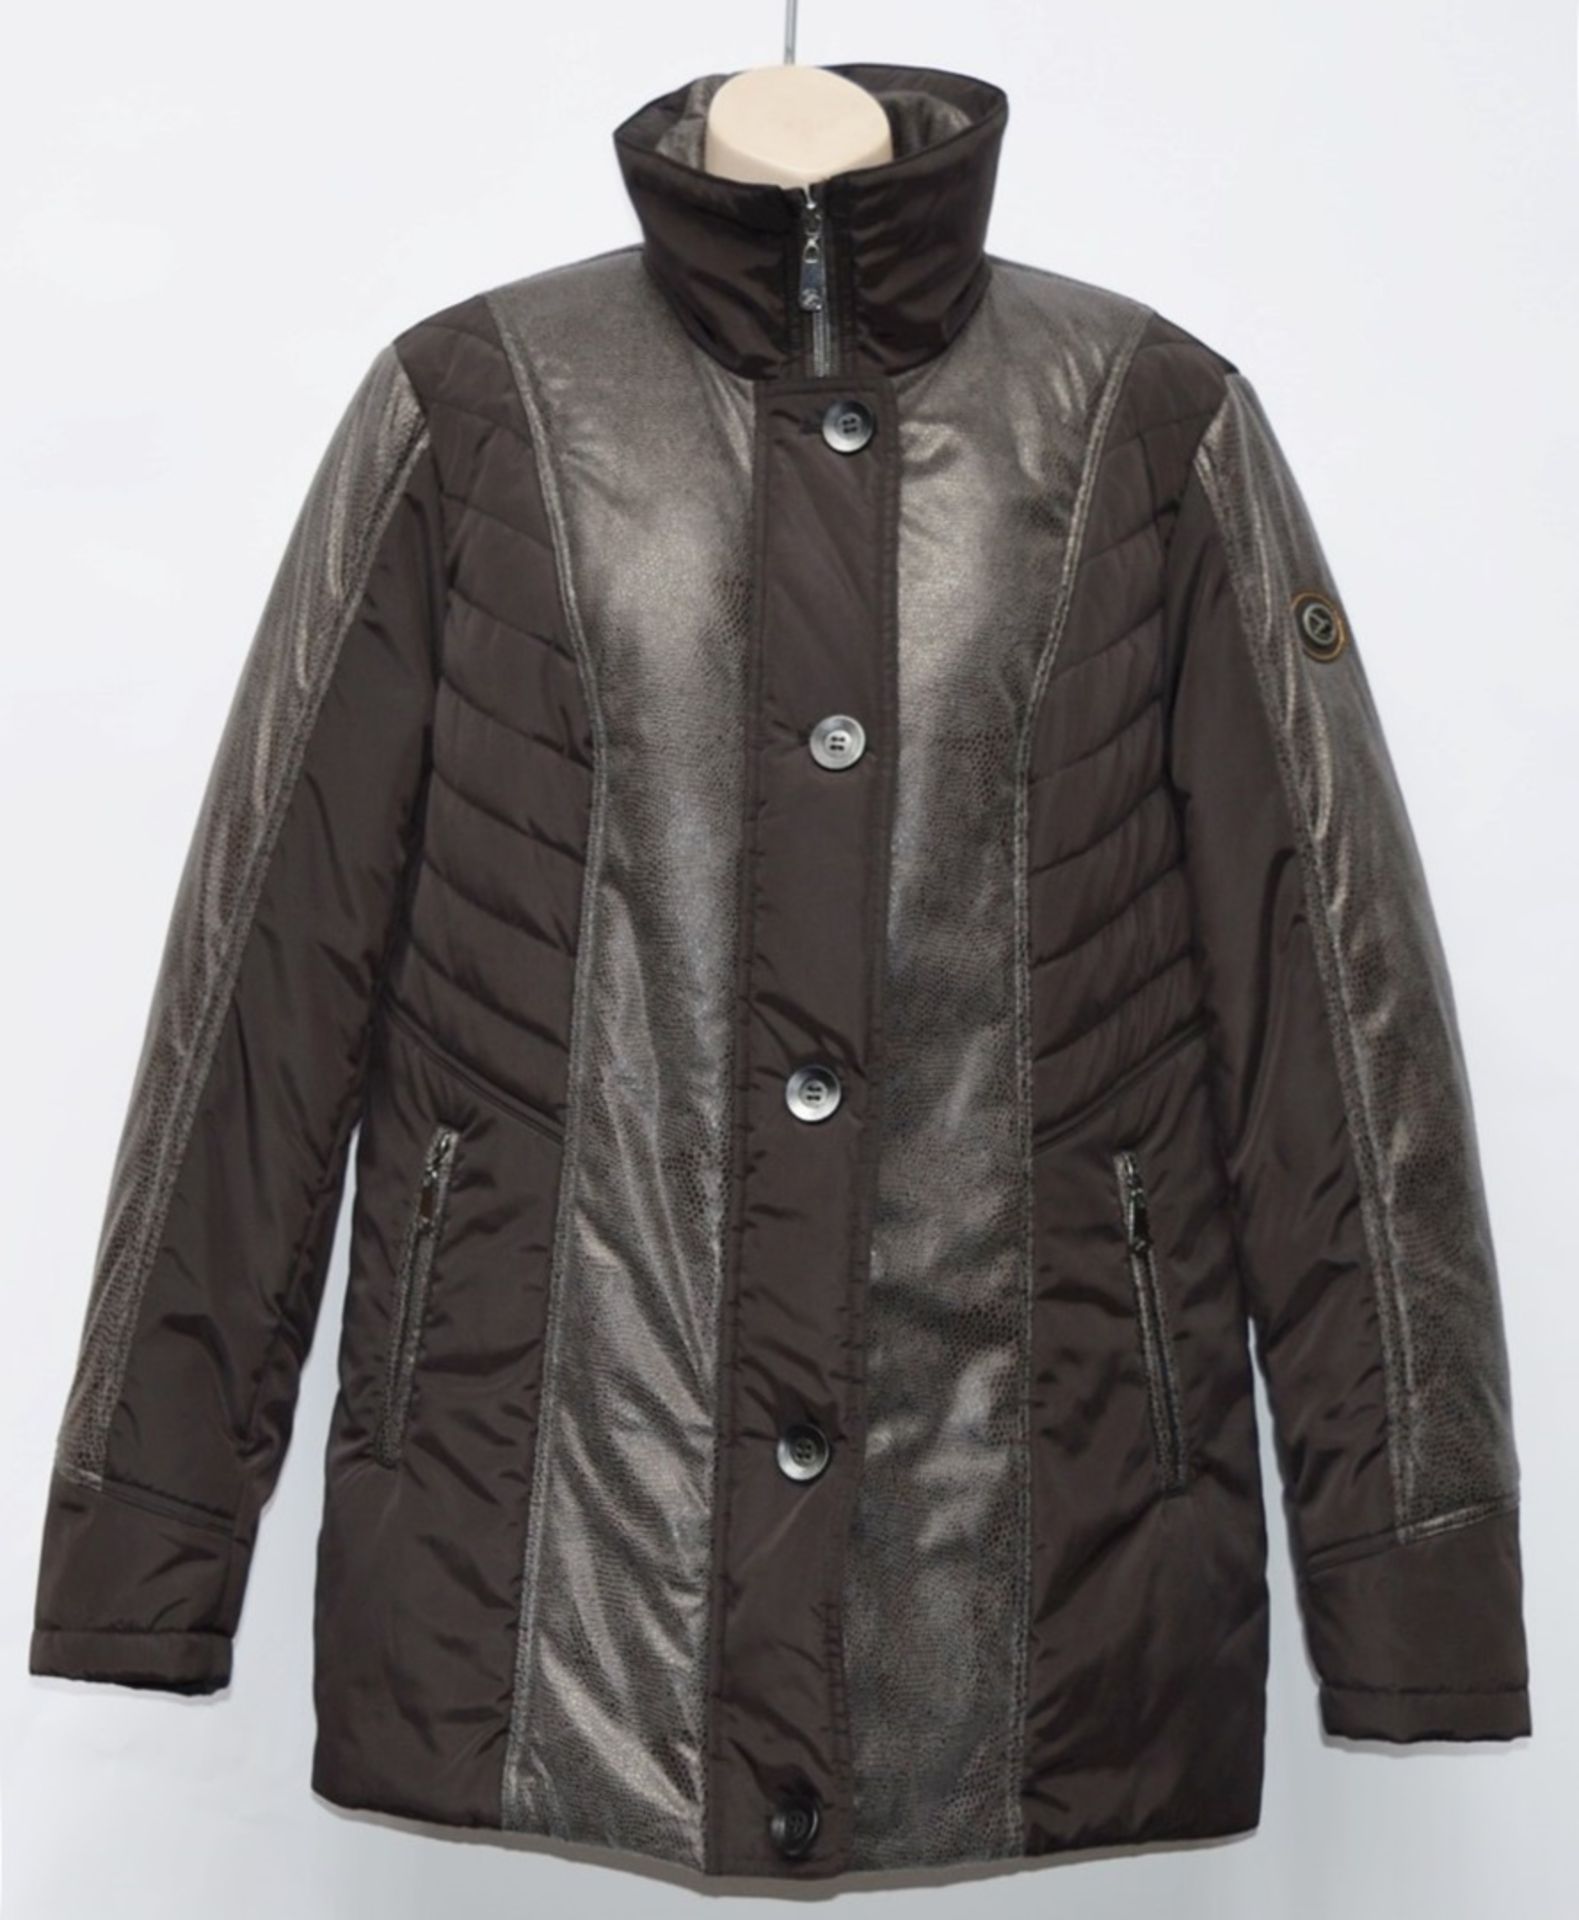 1 x Steilmann Kirsten Womens Coat - UK Size 12 - Warm Padded Coat With Animal Skin Texture Material,